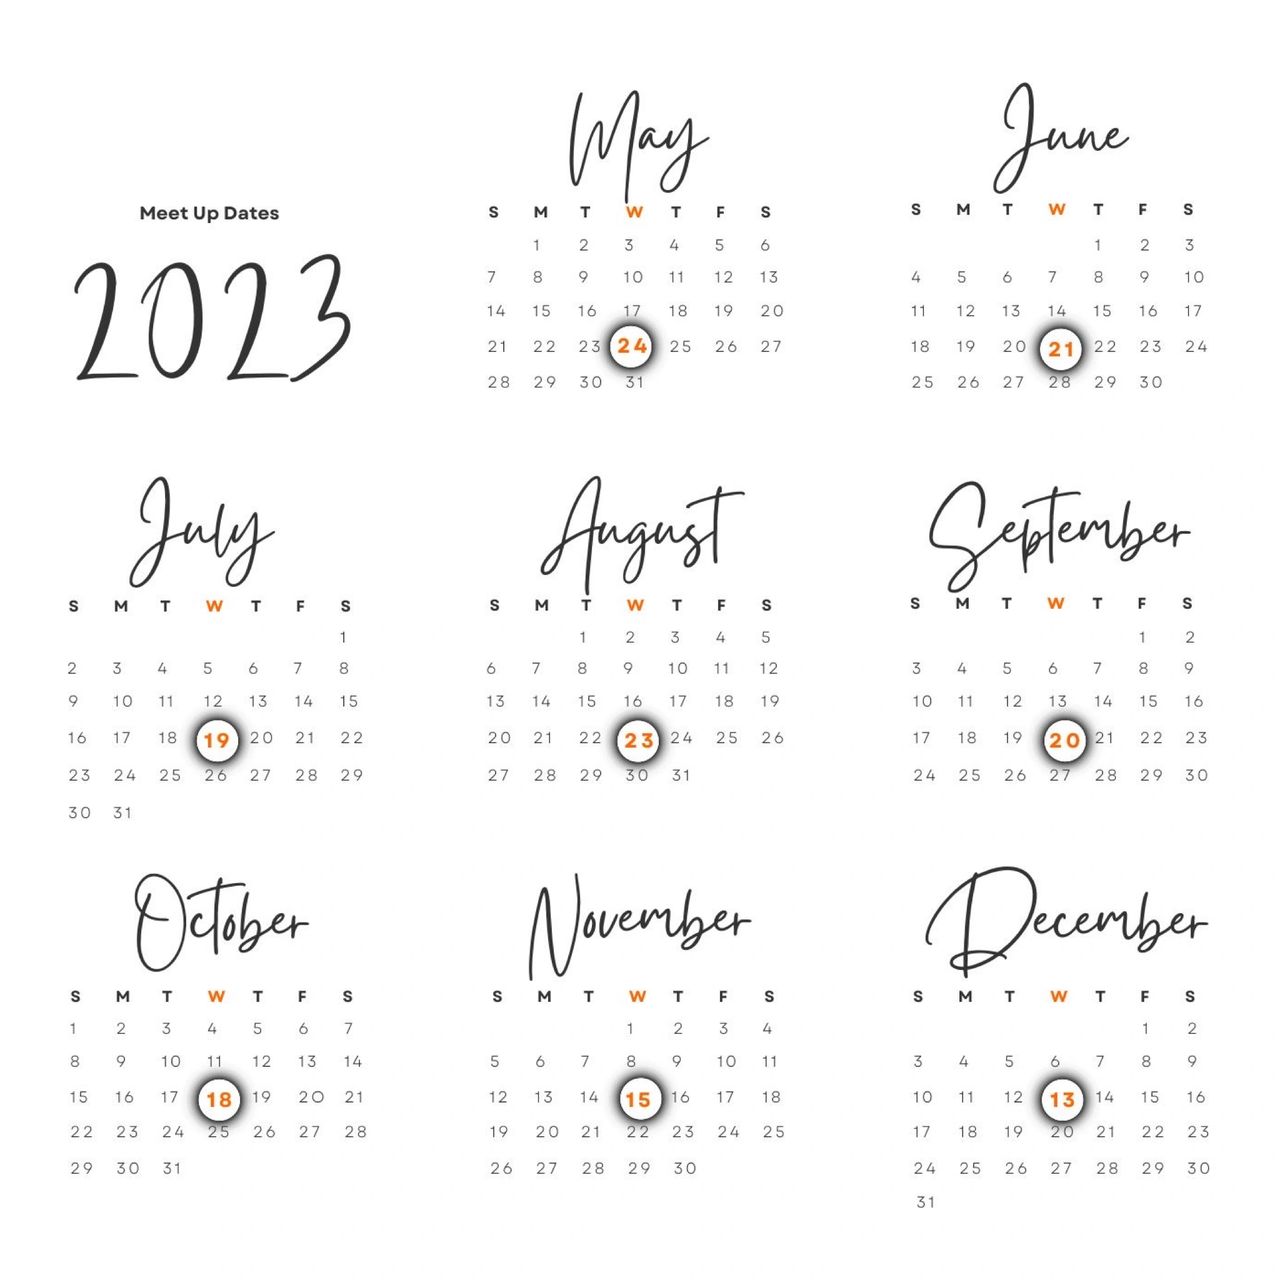 2023 Dates - Wednesdays - May 24 | June 21 | July 19 | Aug 23 | Sept 20 | Oct 18 | Nov 15 | Dec 13